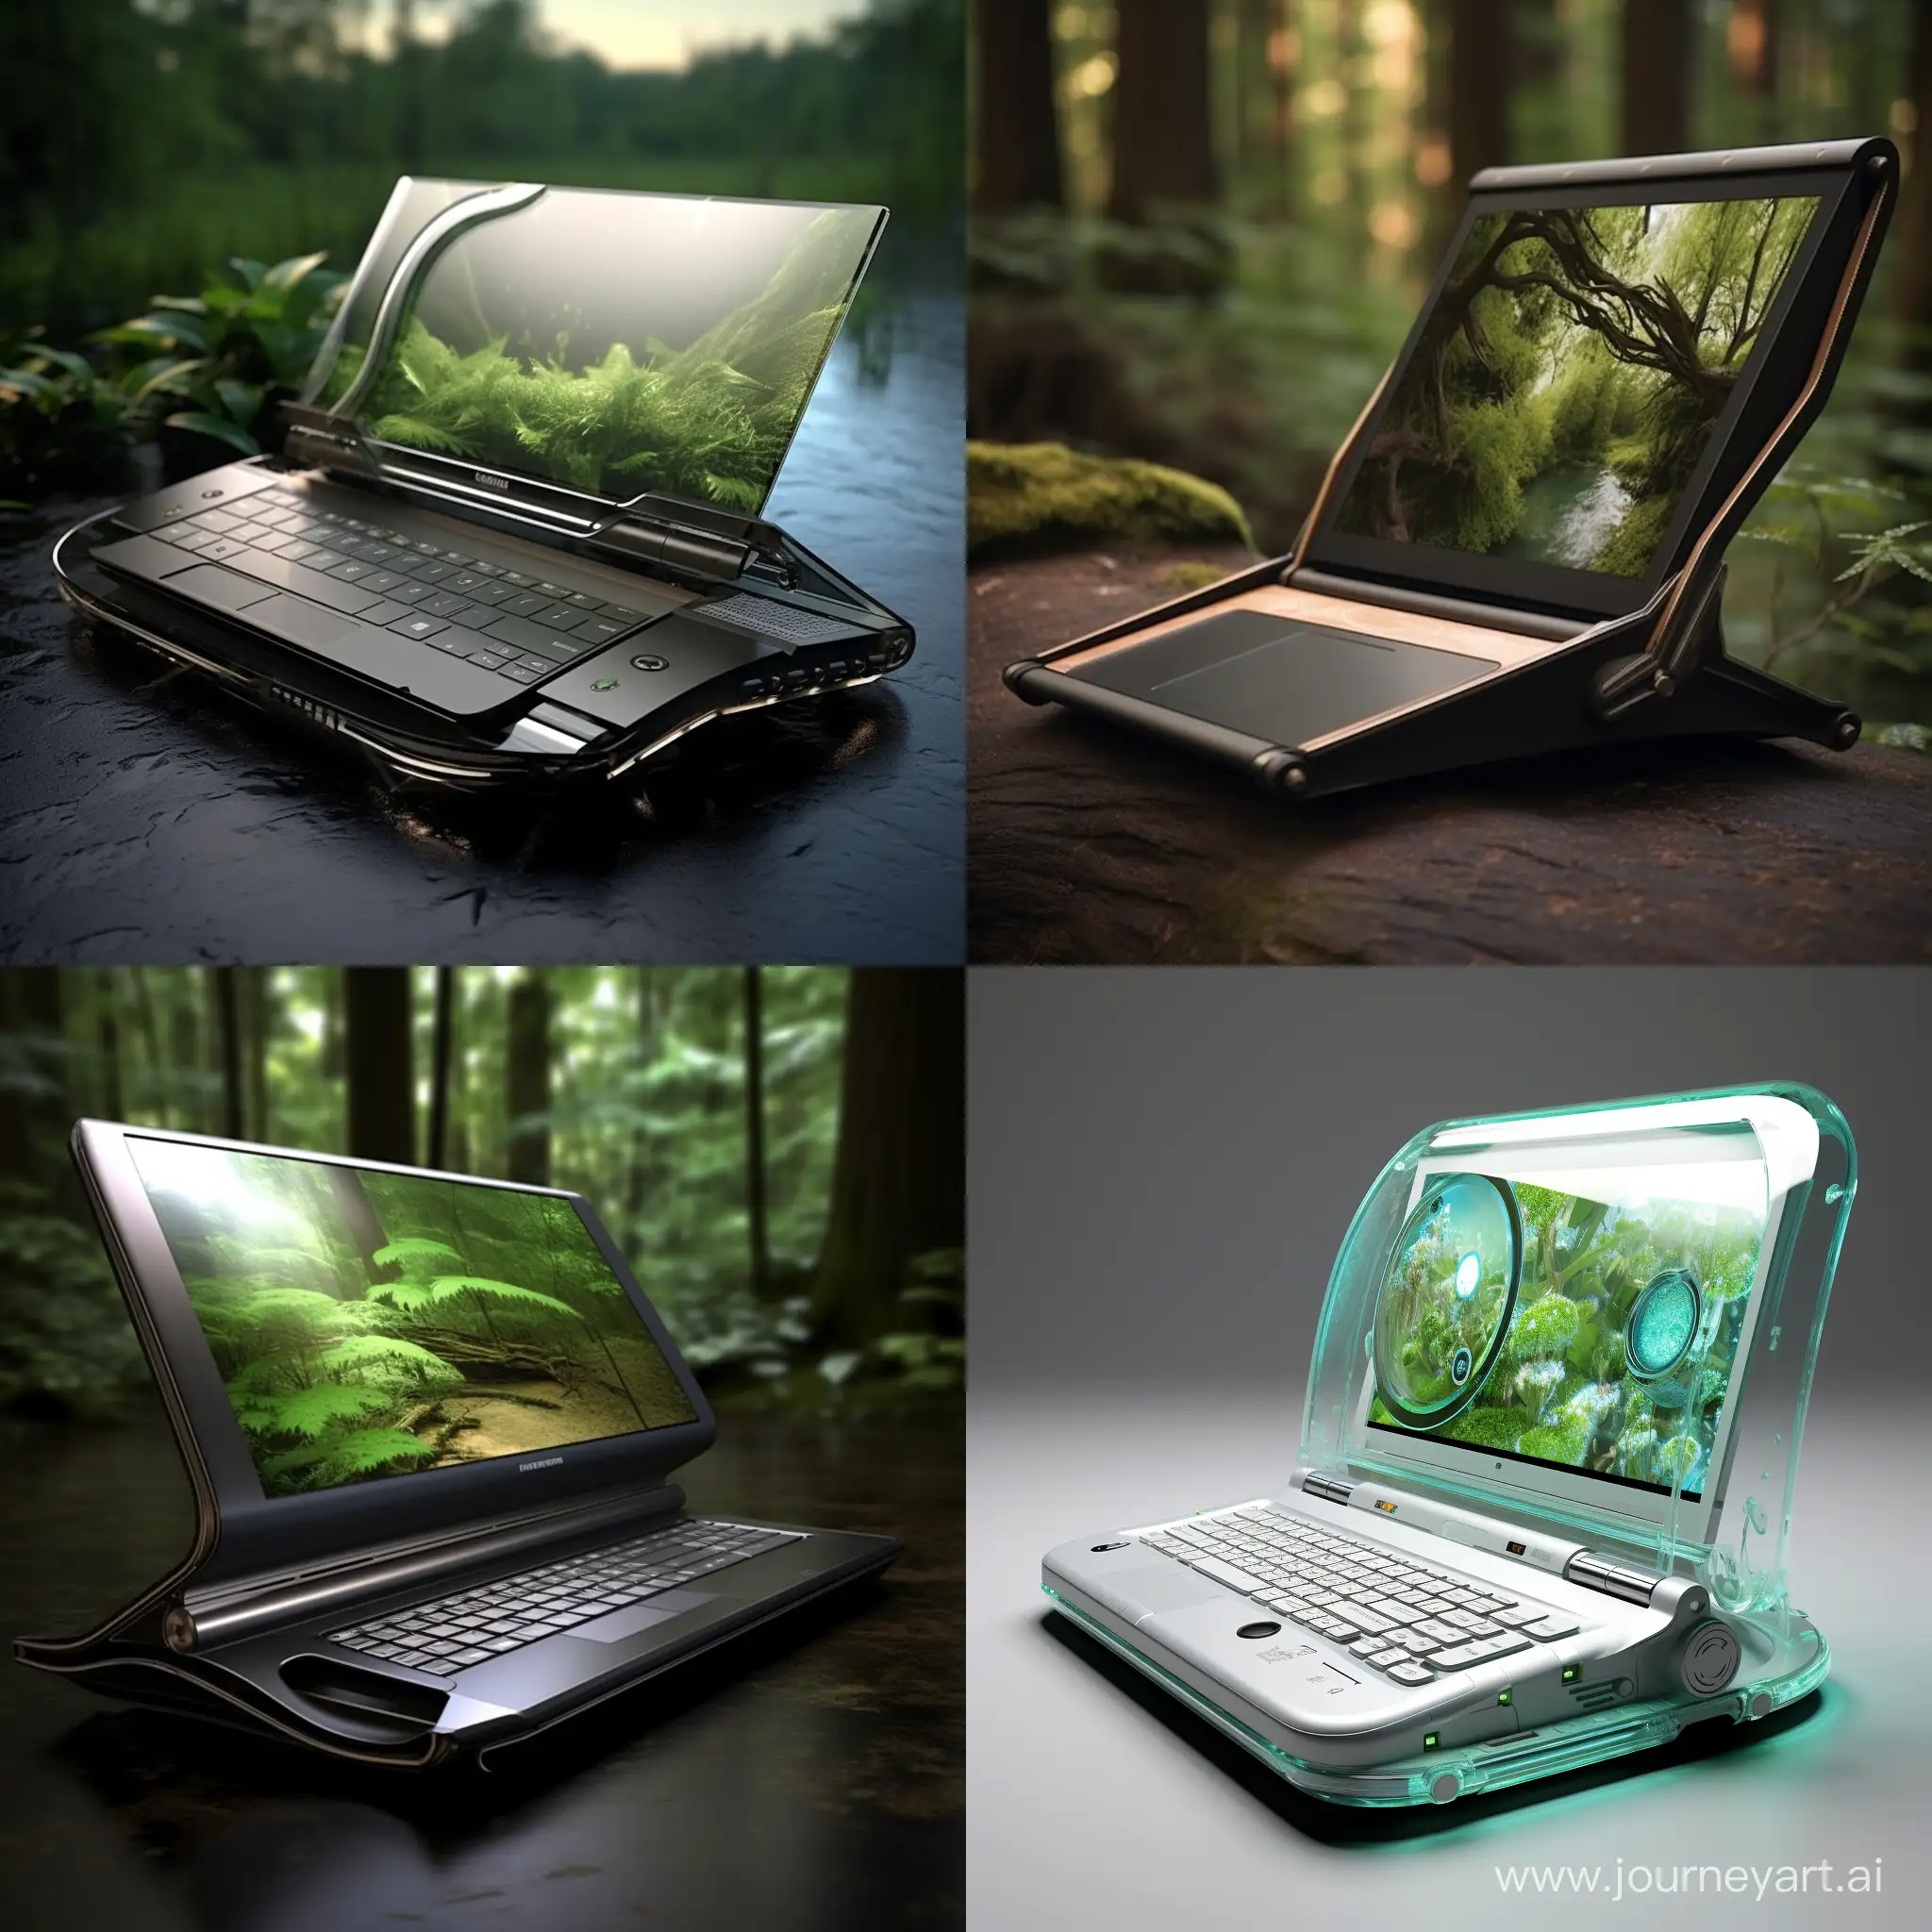 Futuristic eco-friendly laptop